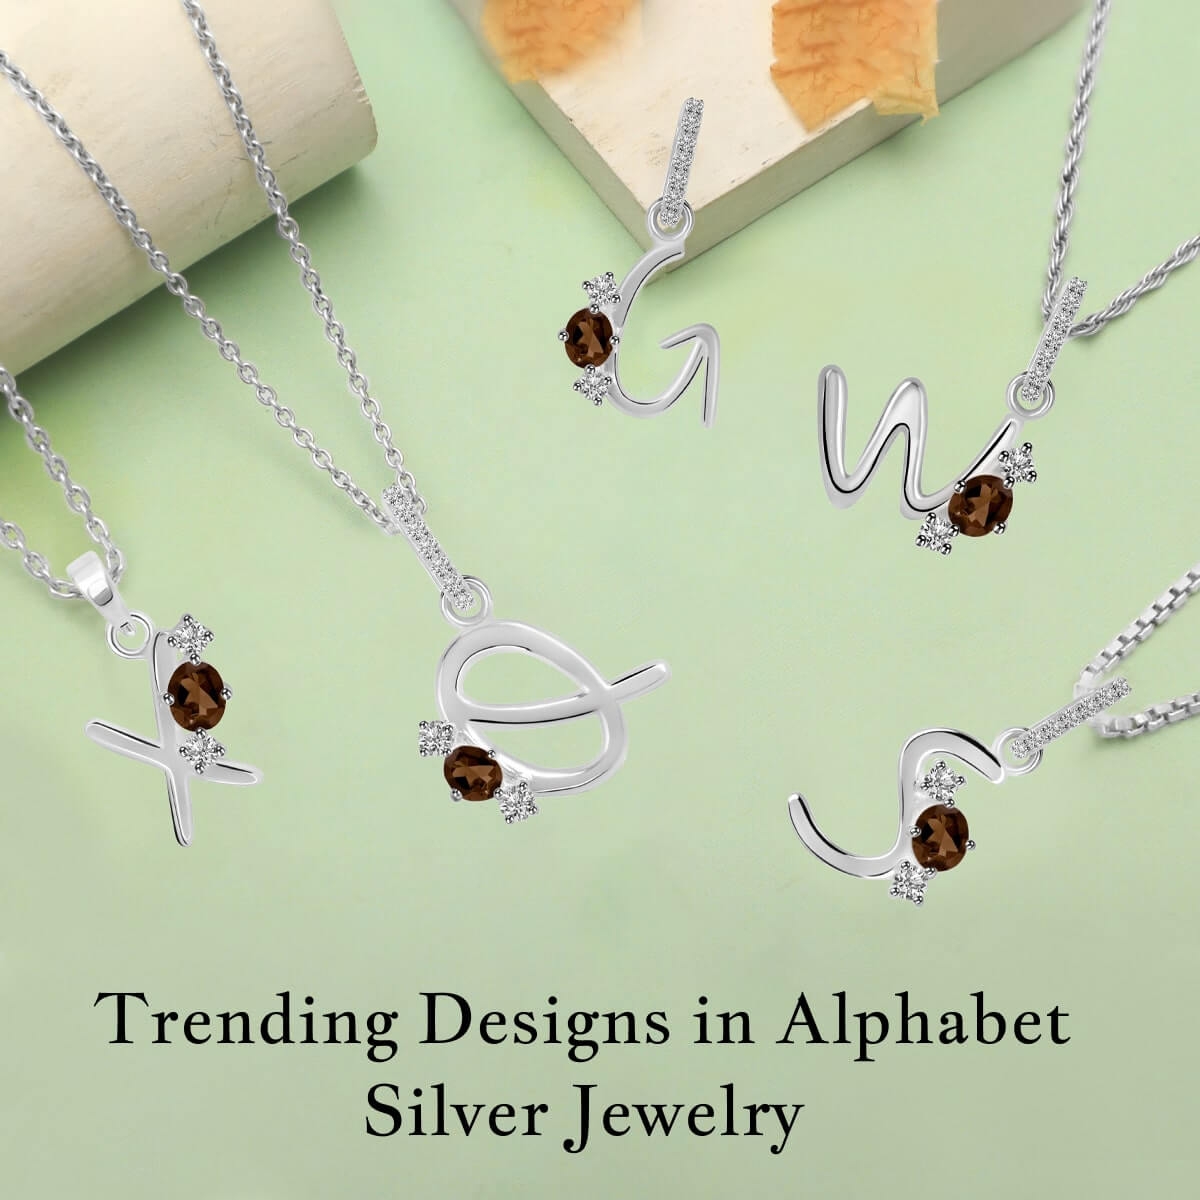 Alphabet Sterling Silver Jewelry